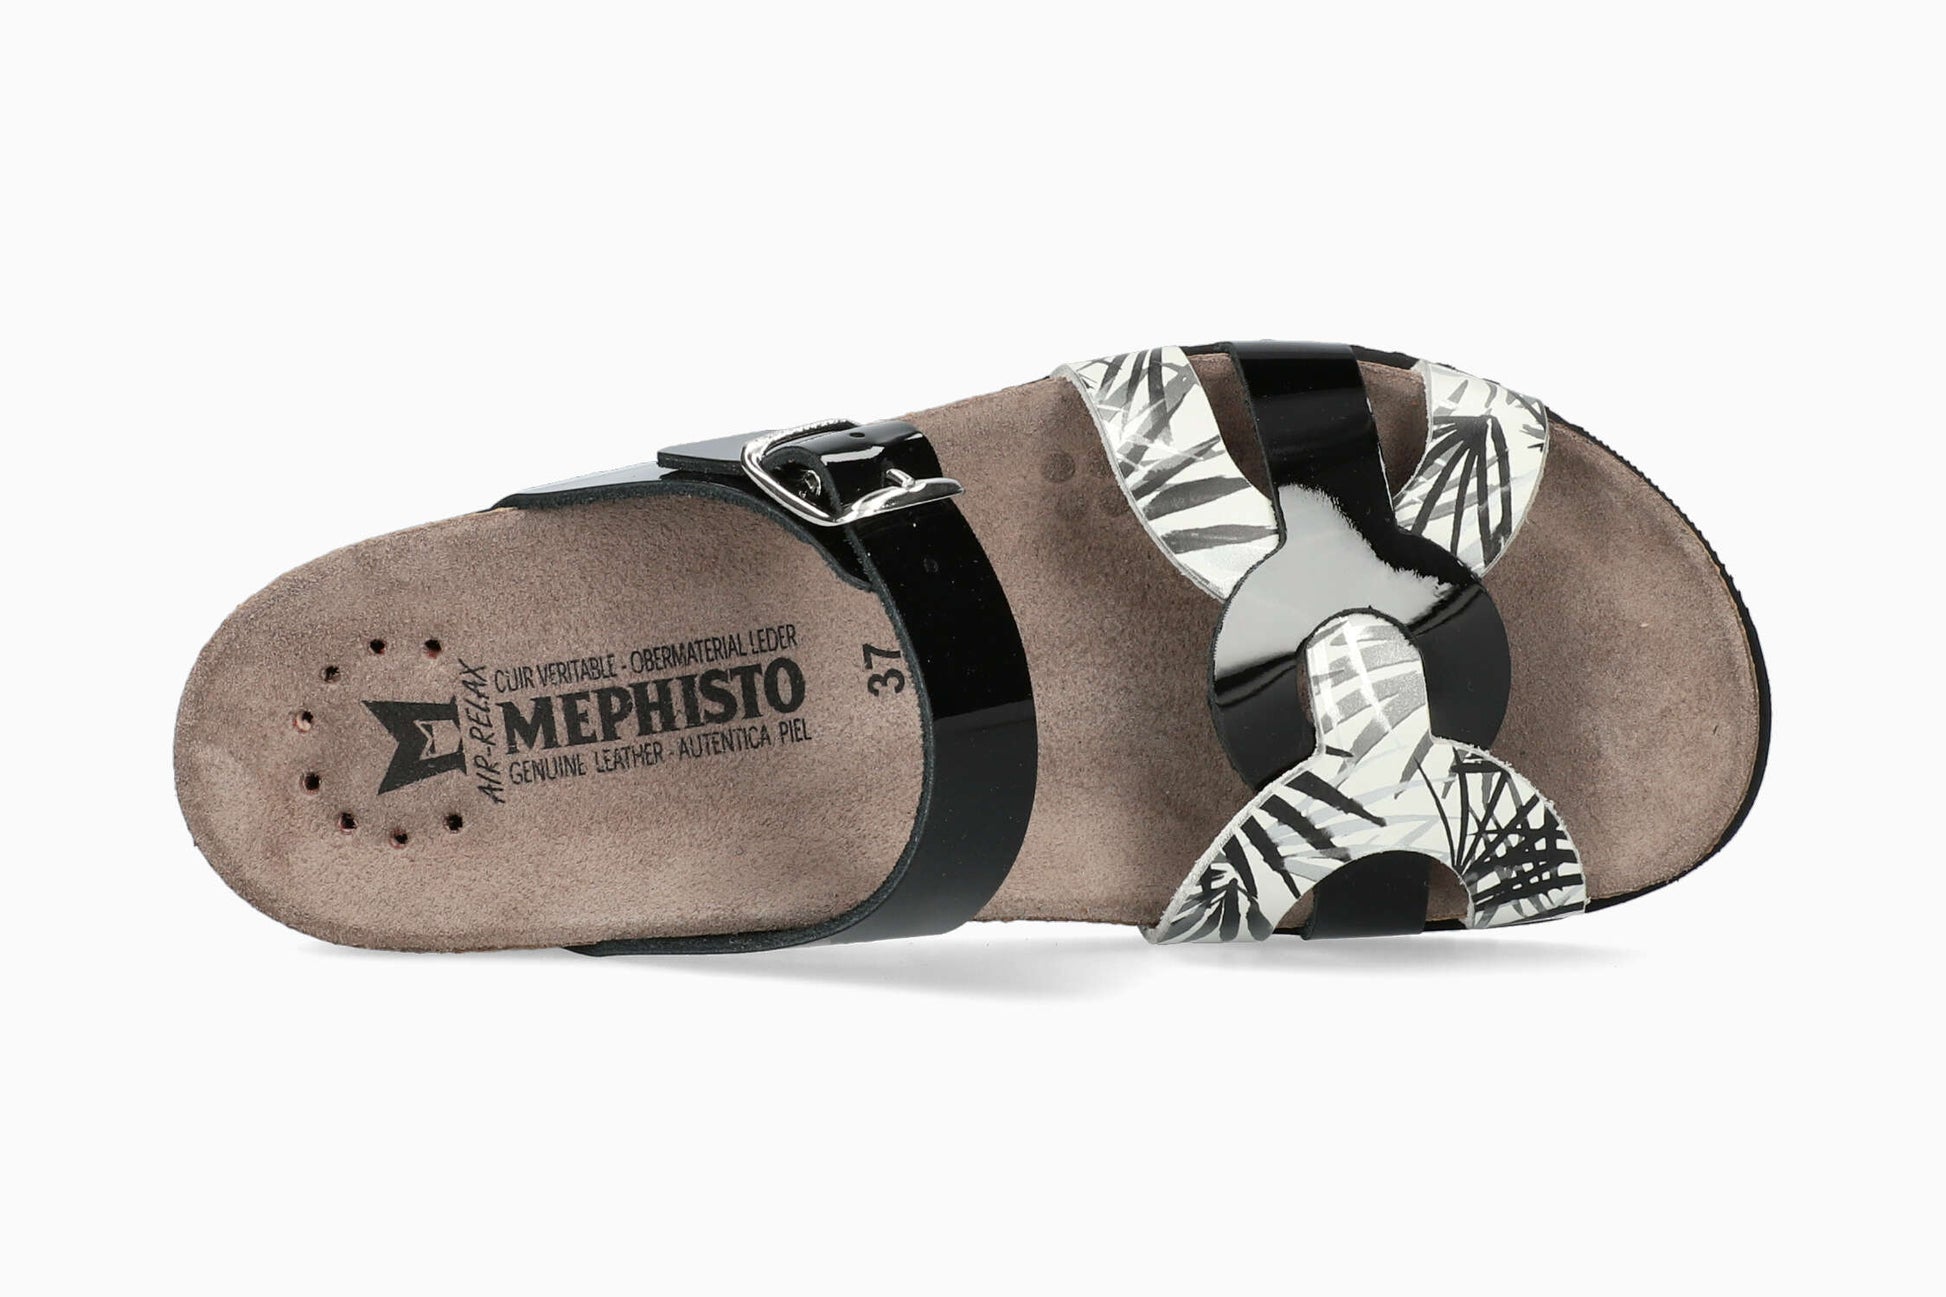 Mephisto Helma Women's Sandal Black Top